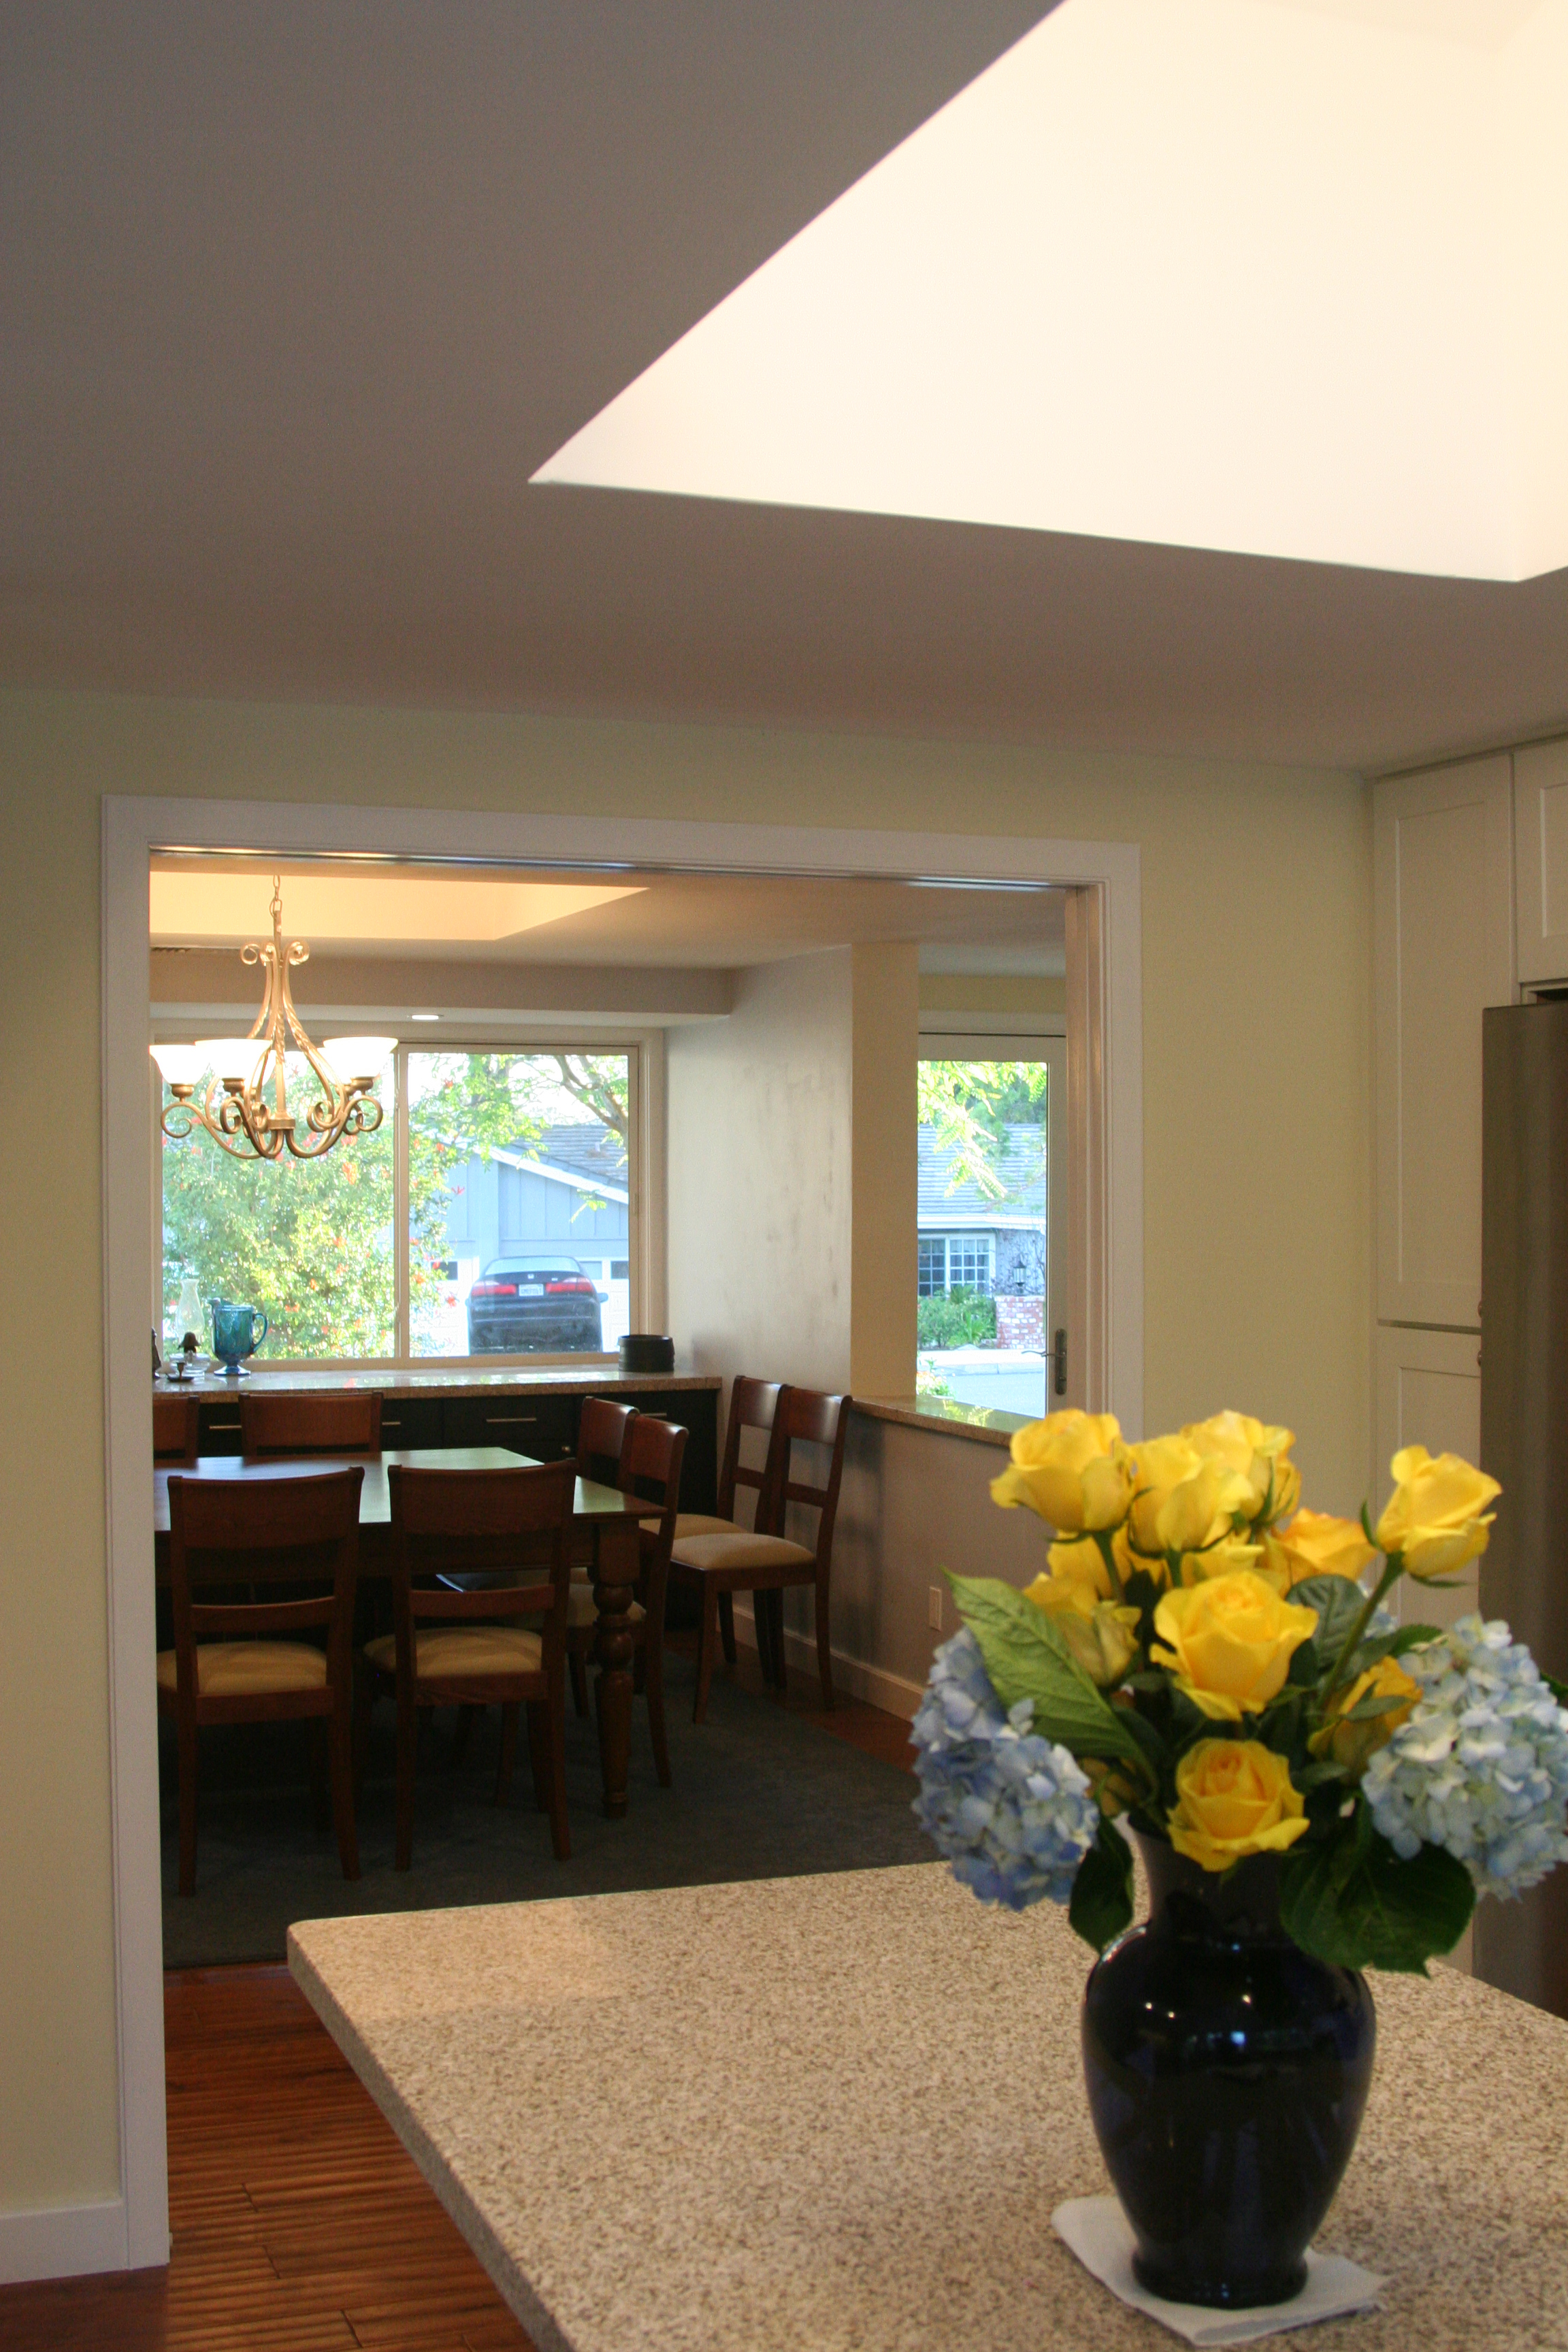 Kitchen Island Skylight - Dining - 2-Story Addition - Sustainable WholeHouse Remodel - Landscape - ENR architects, Thousand Oaks, CA 91360